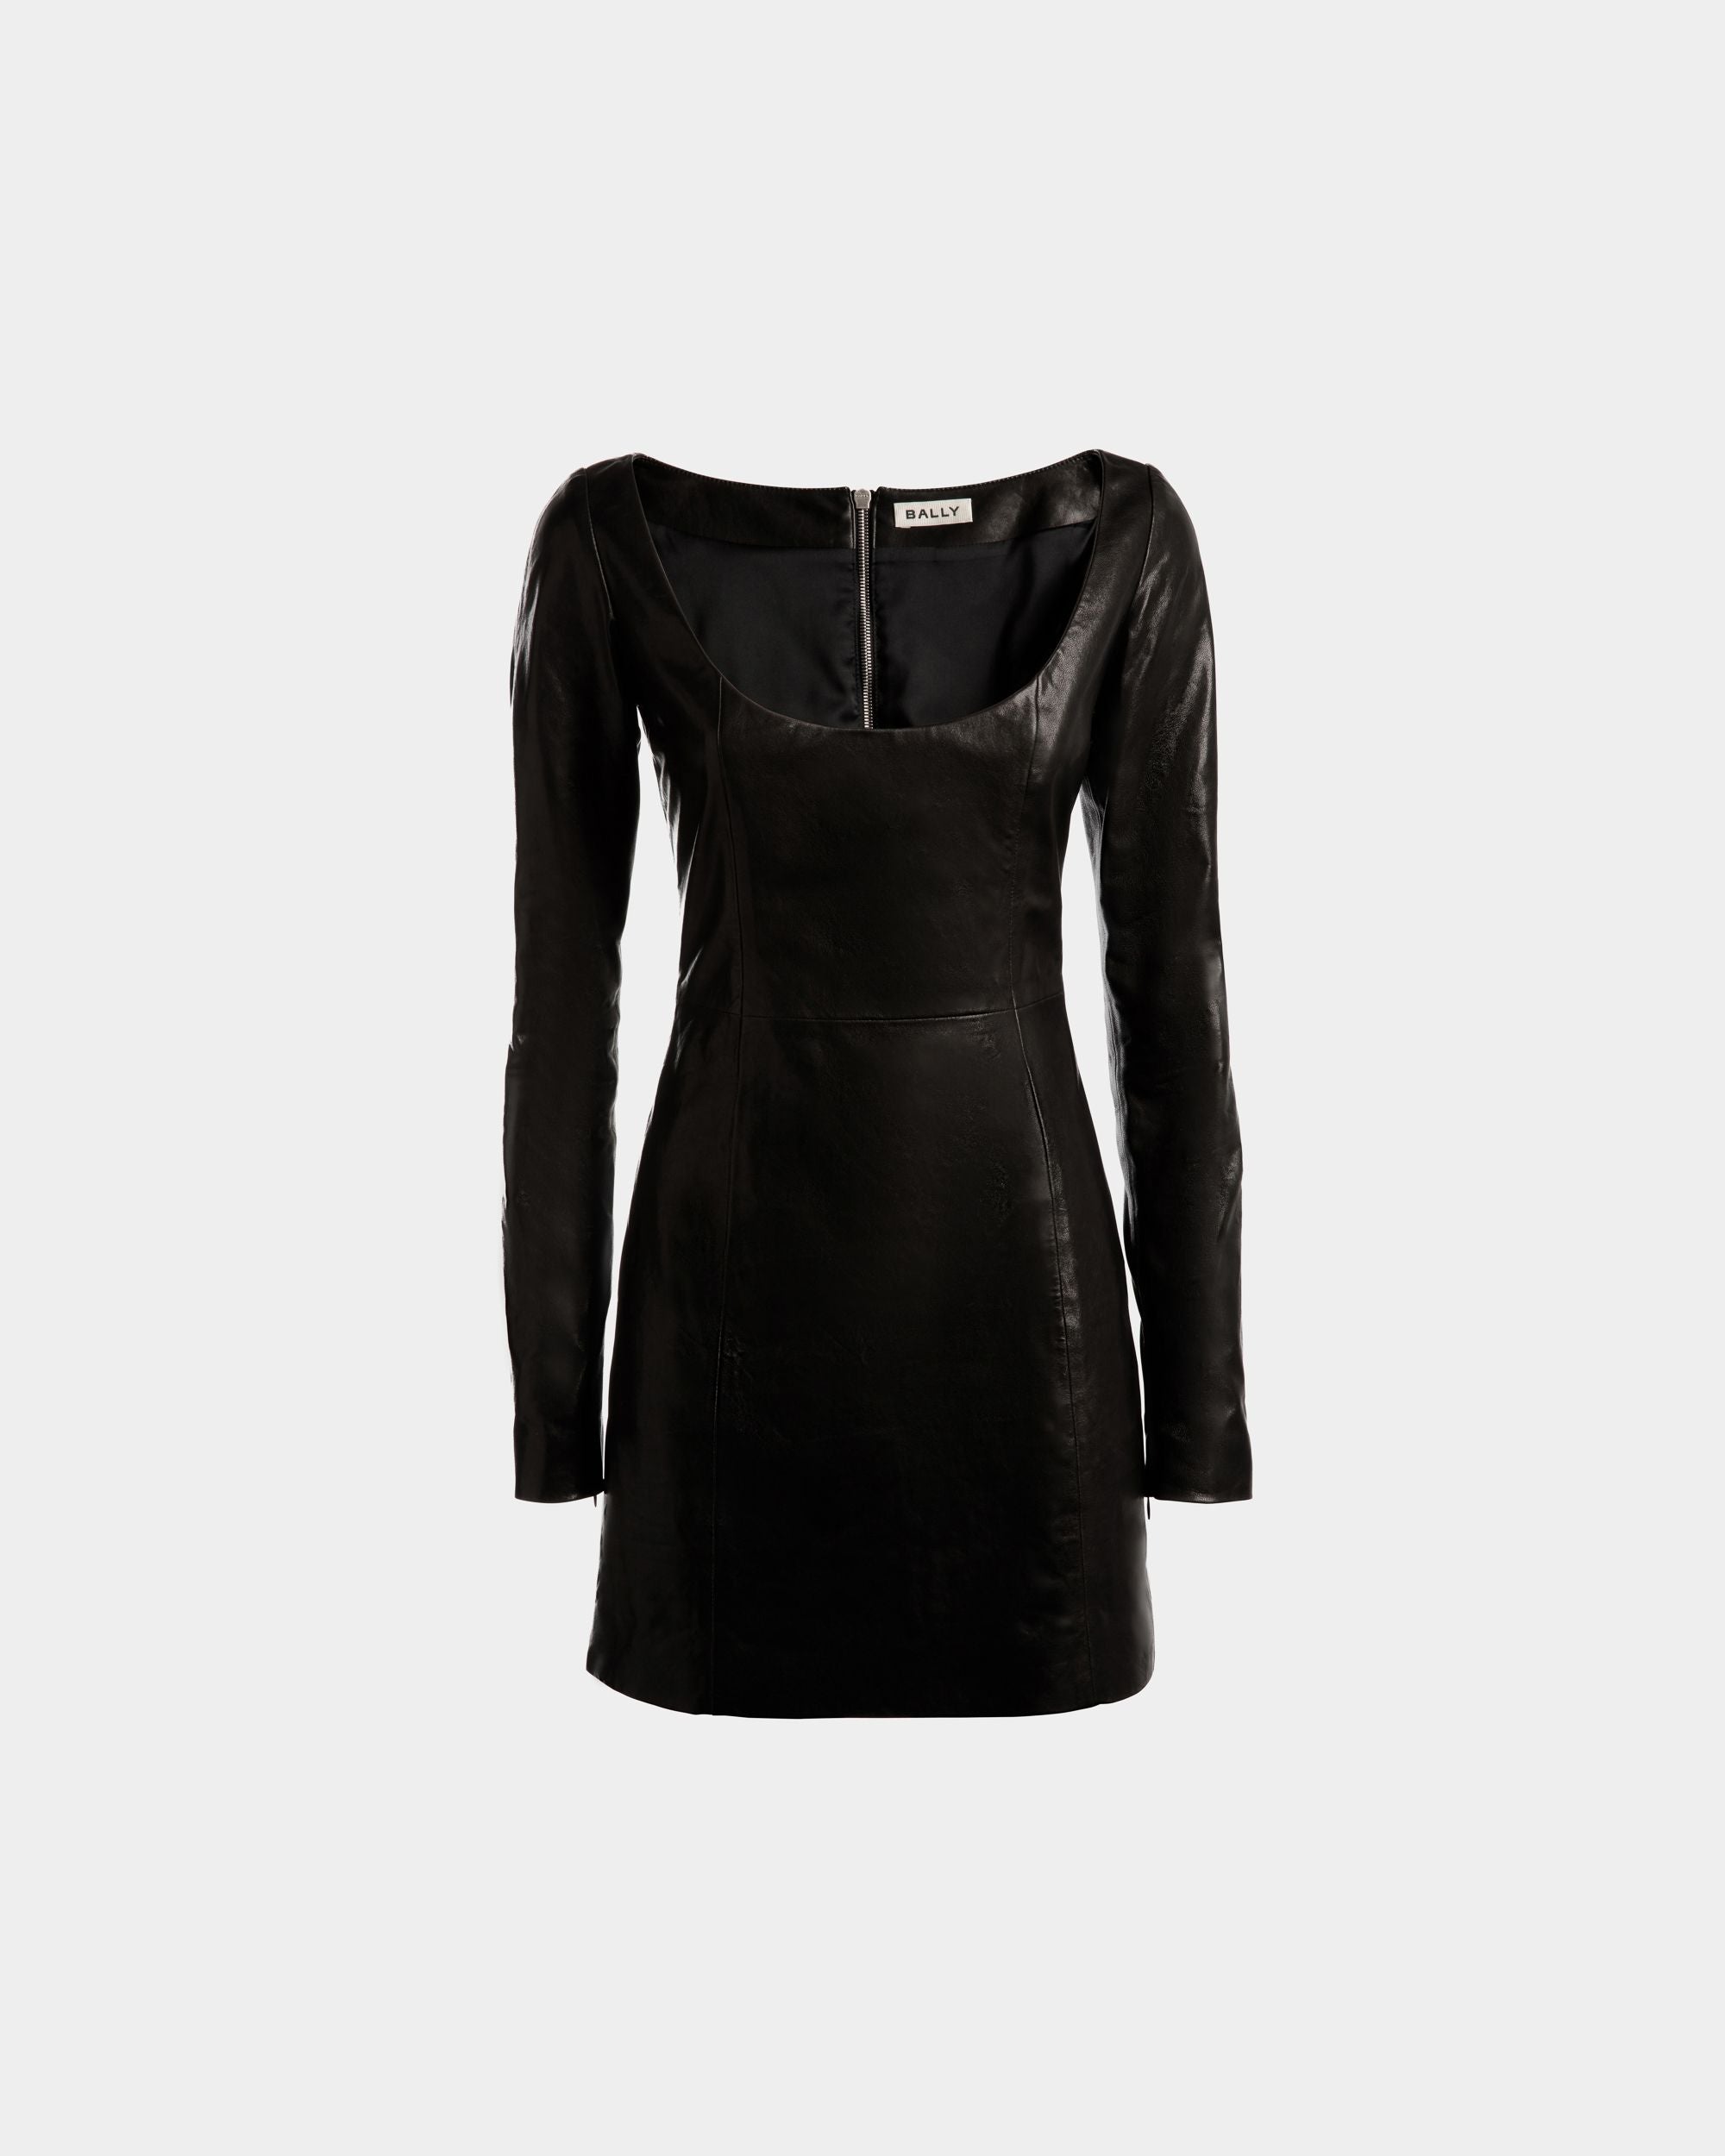 Women's Long Sleeve Mini Dress in Black Leather | Bally | Still Life Front